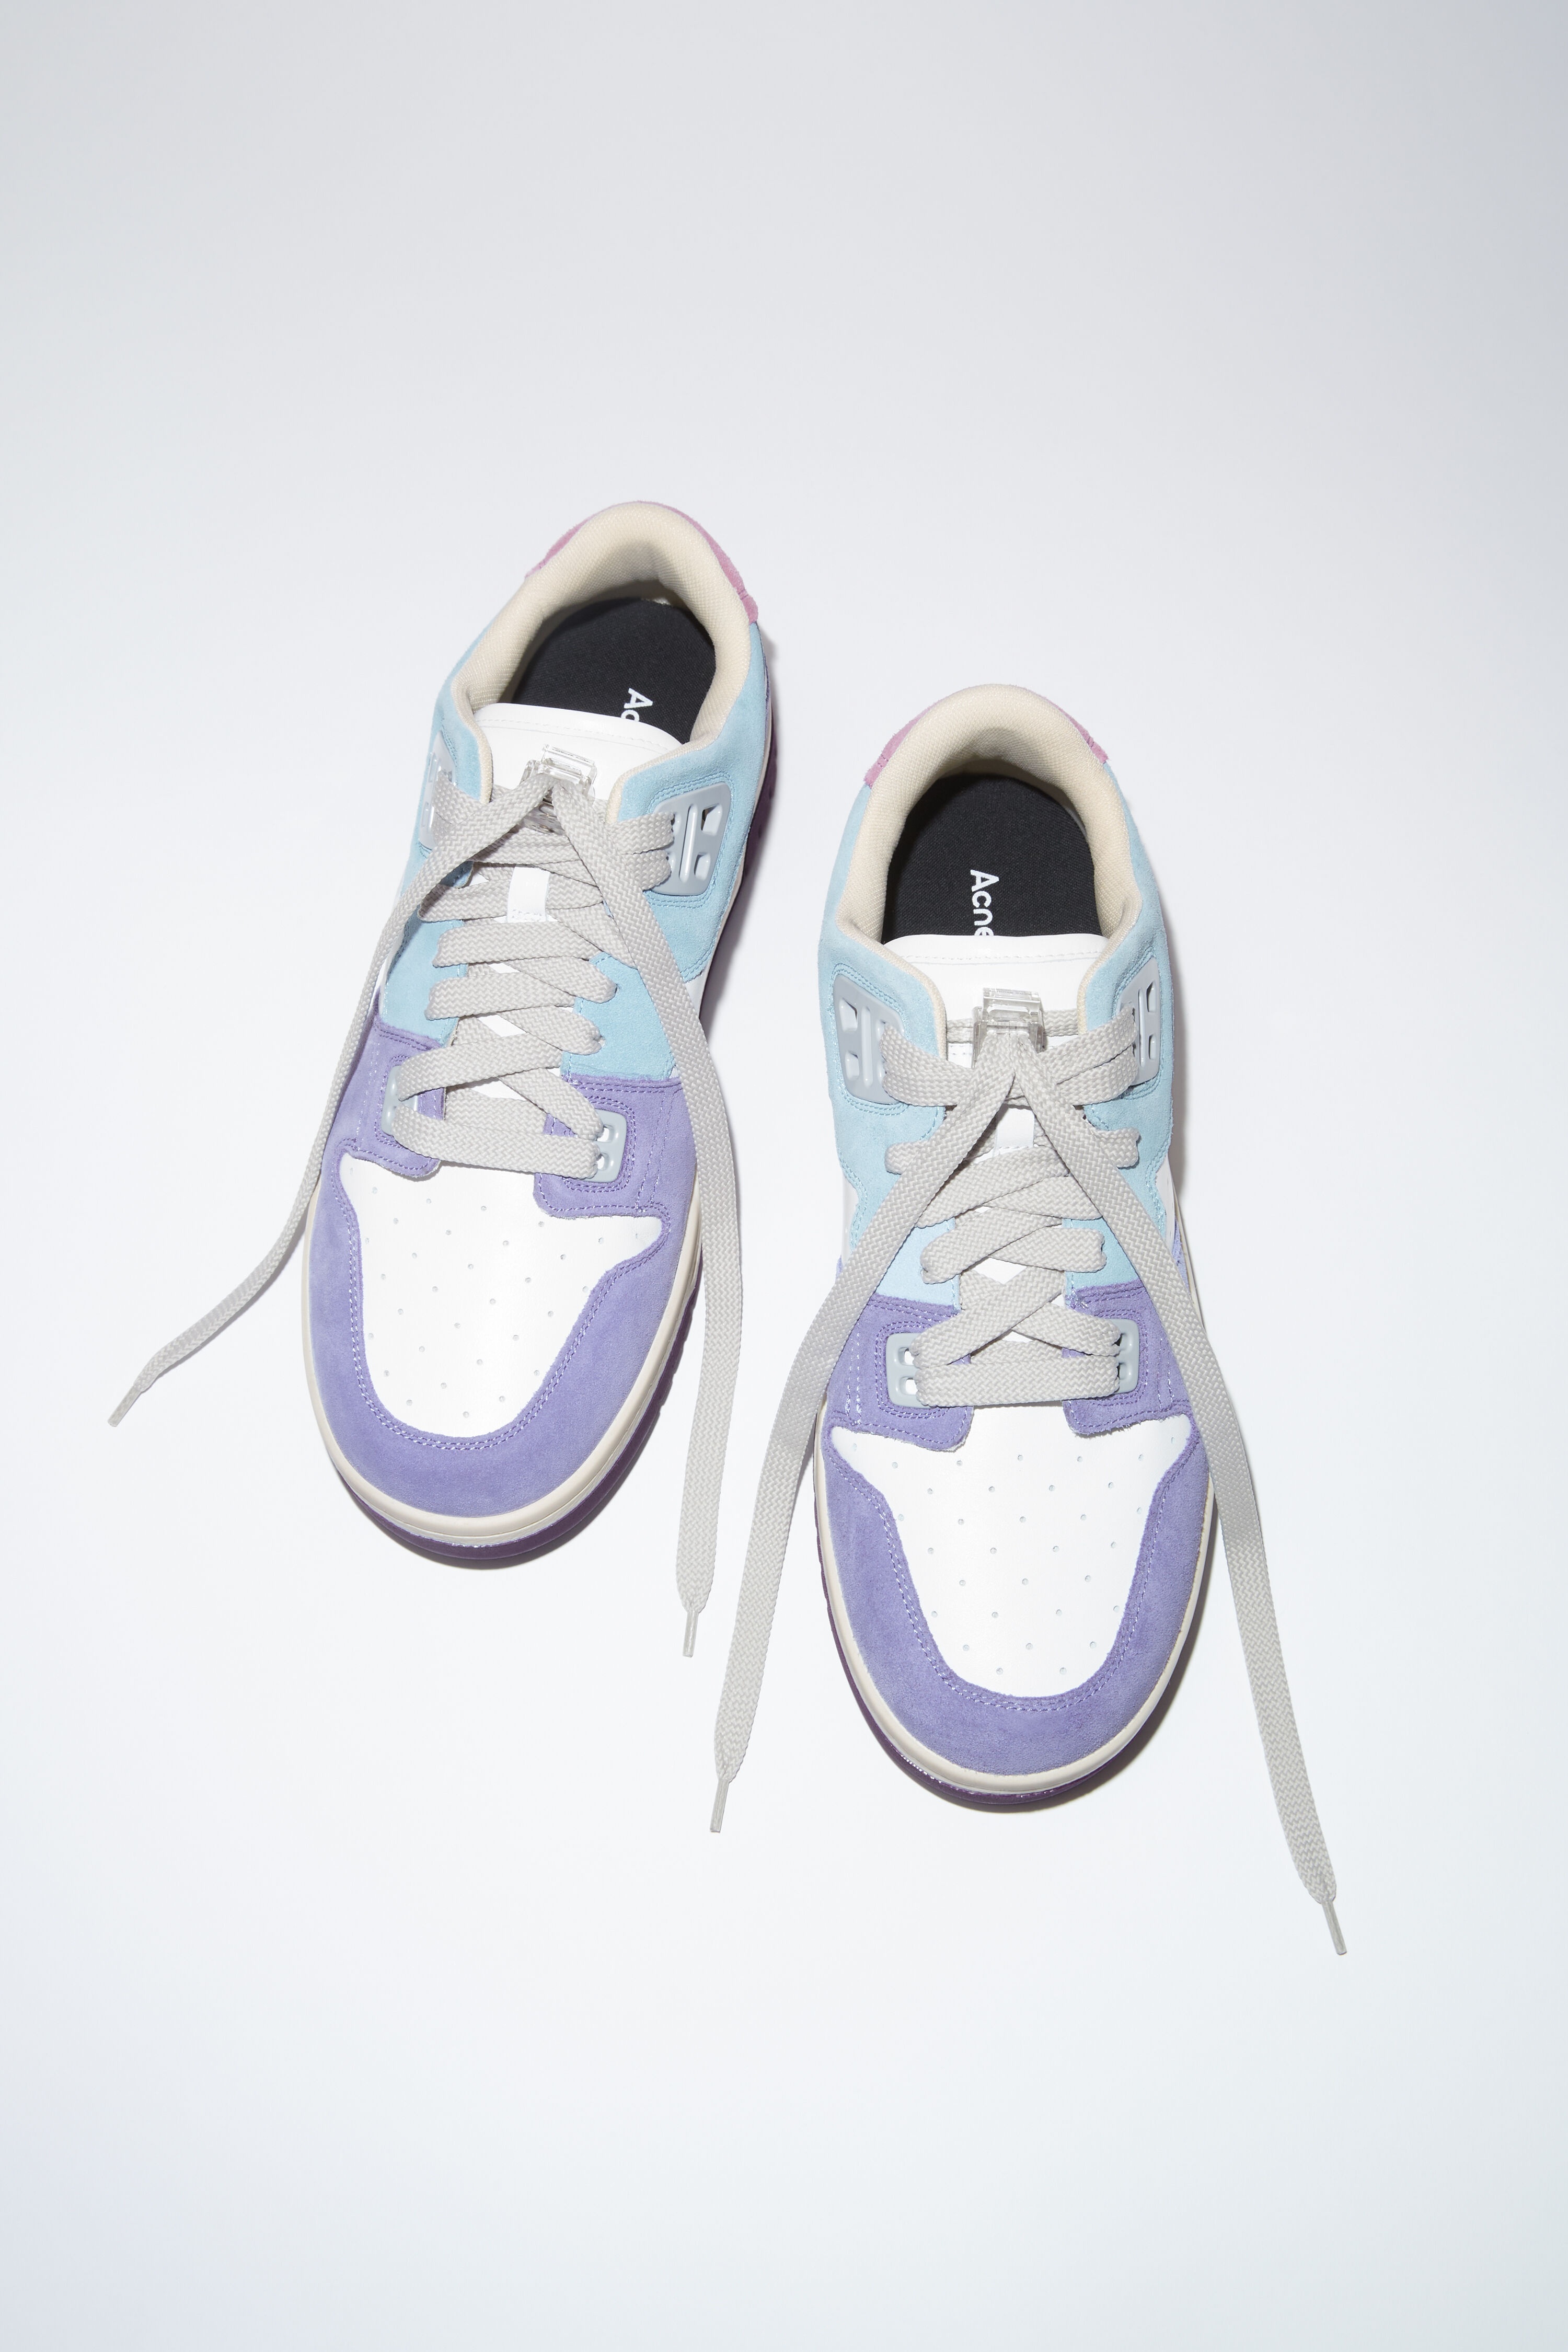 Acne Studios Low top suede sneakers - Blue/white | REVERSIBLE